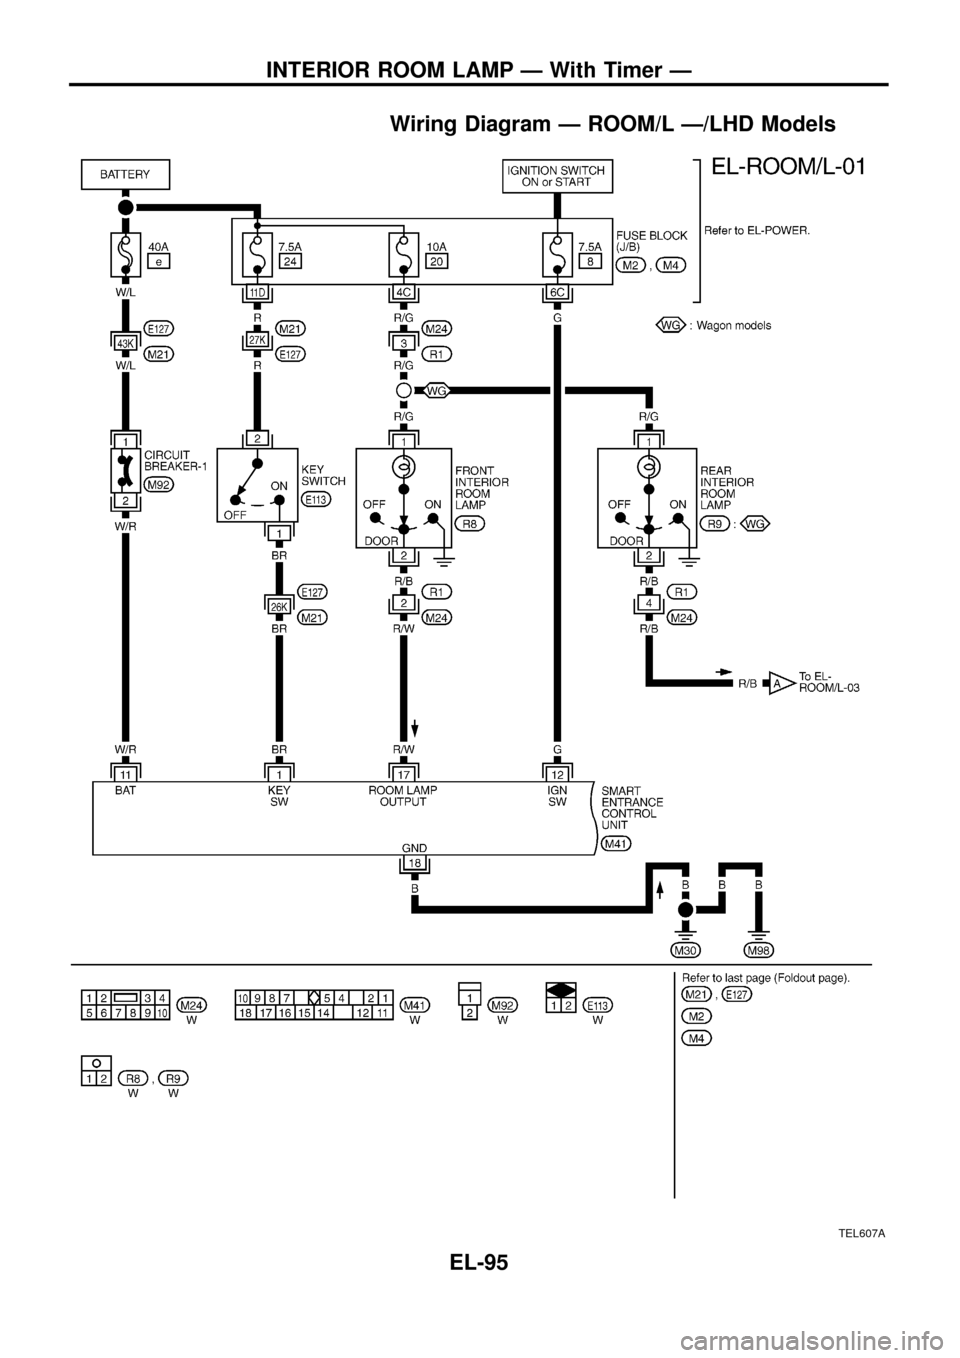 NISSAN PATROL 1998 Y61 / 5.G Electrical System Owners Guide Wiring Diagram Ð ROOM/L Ð/LHD Models
TEL607A
INTERIOR ROOM LAMP Ð With Timer Ð
EL-95 